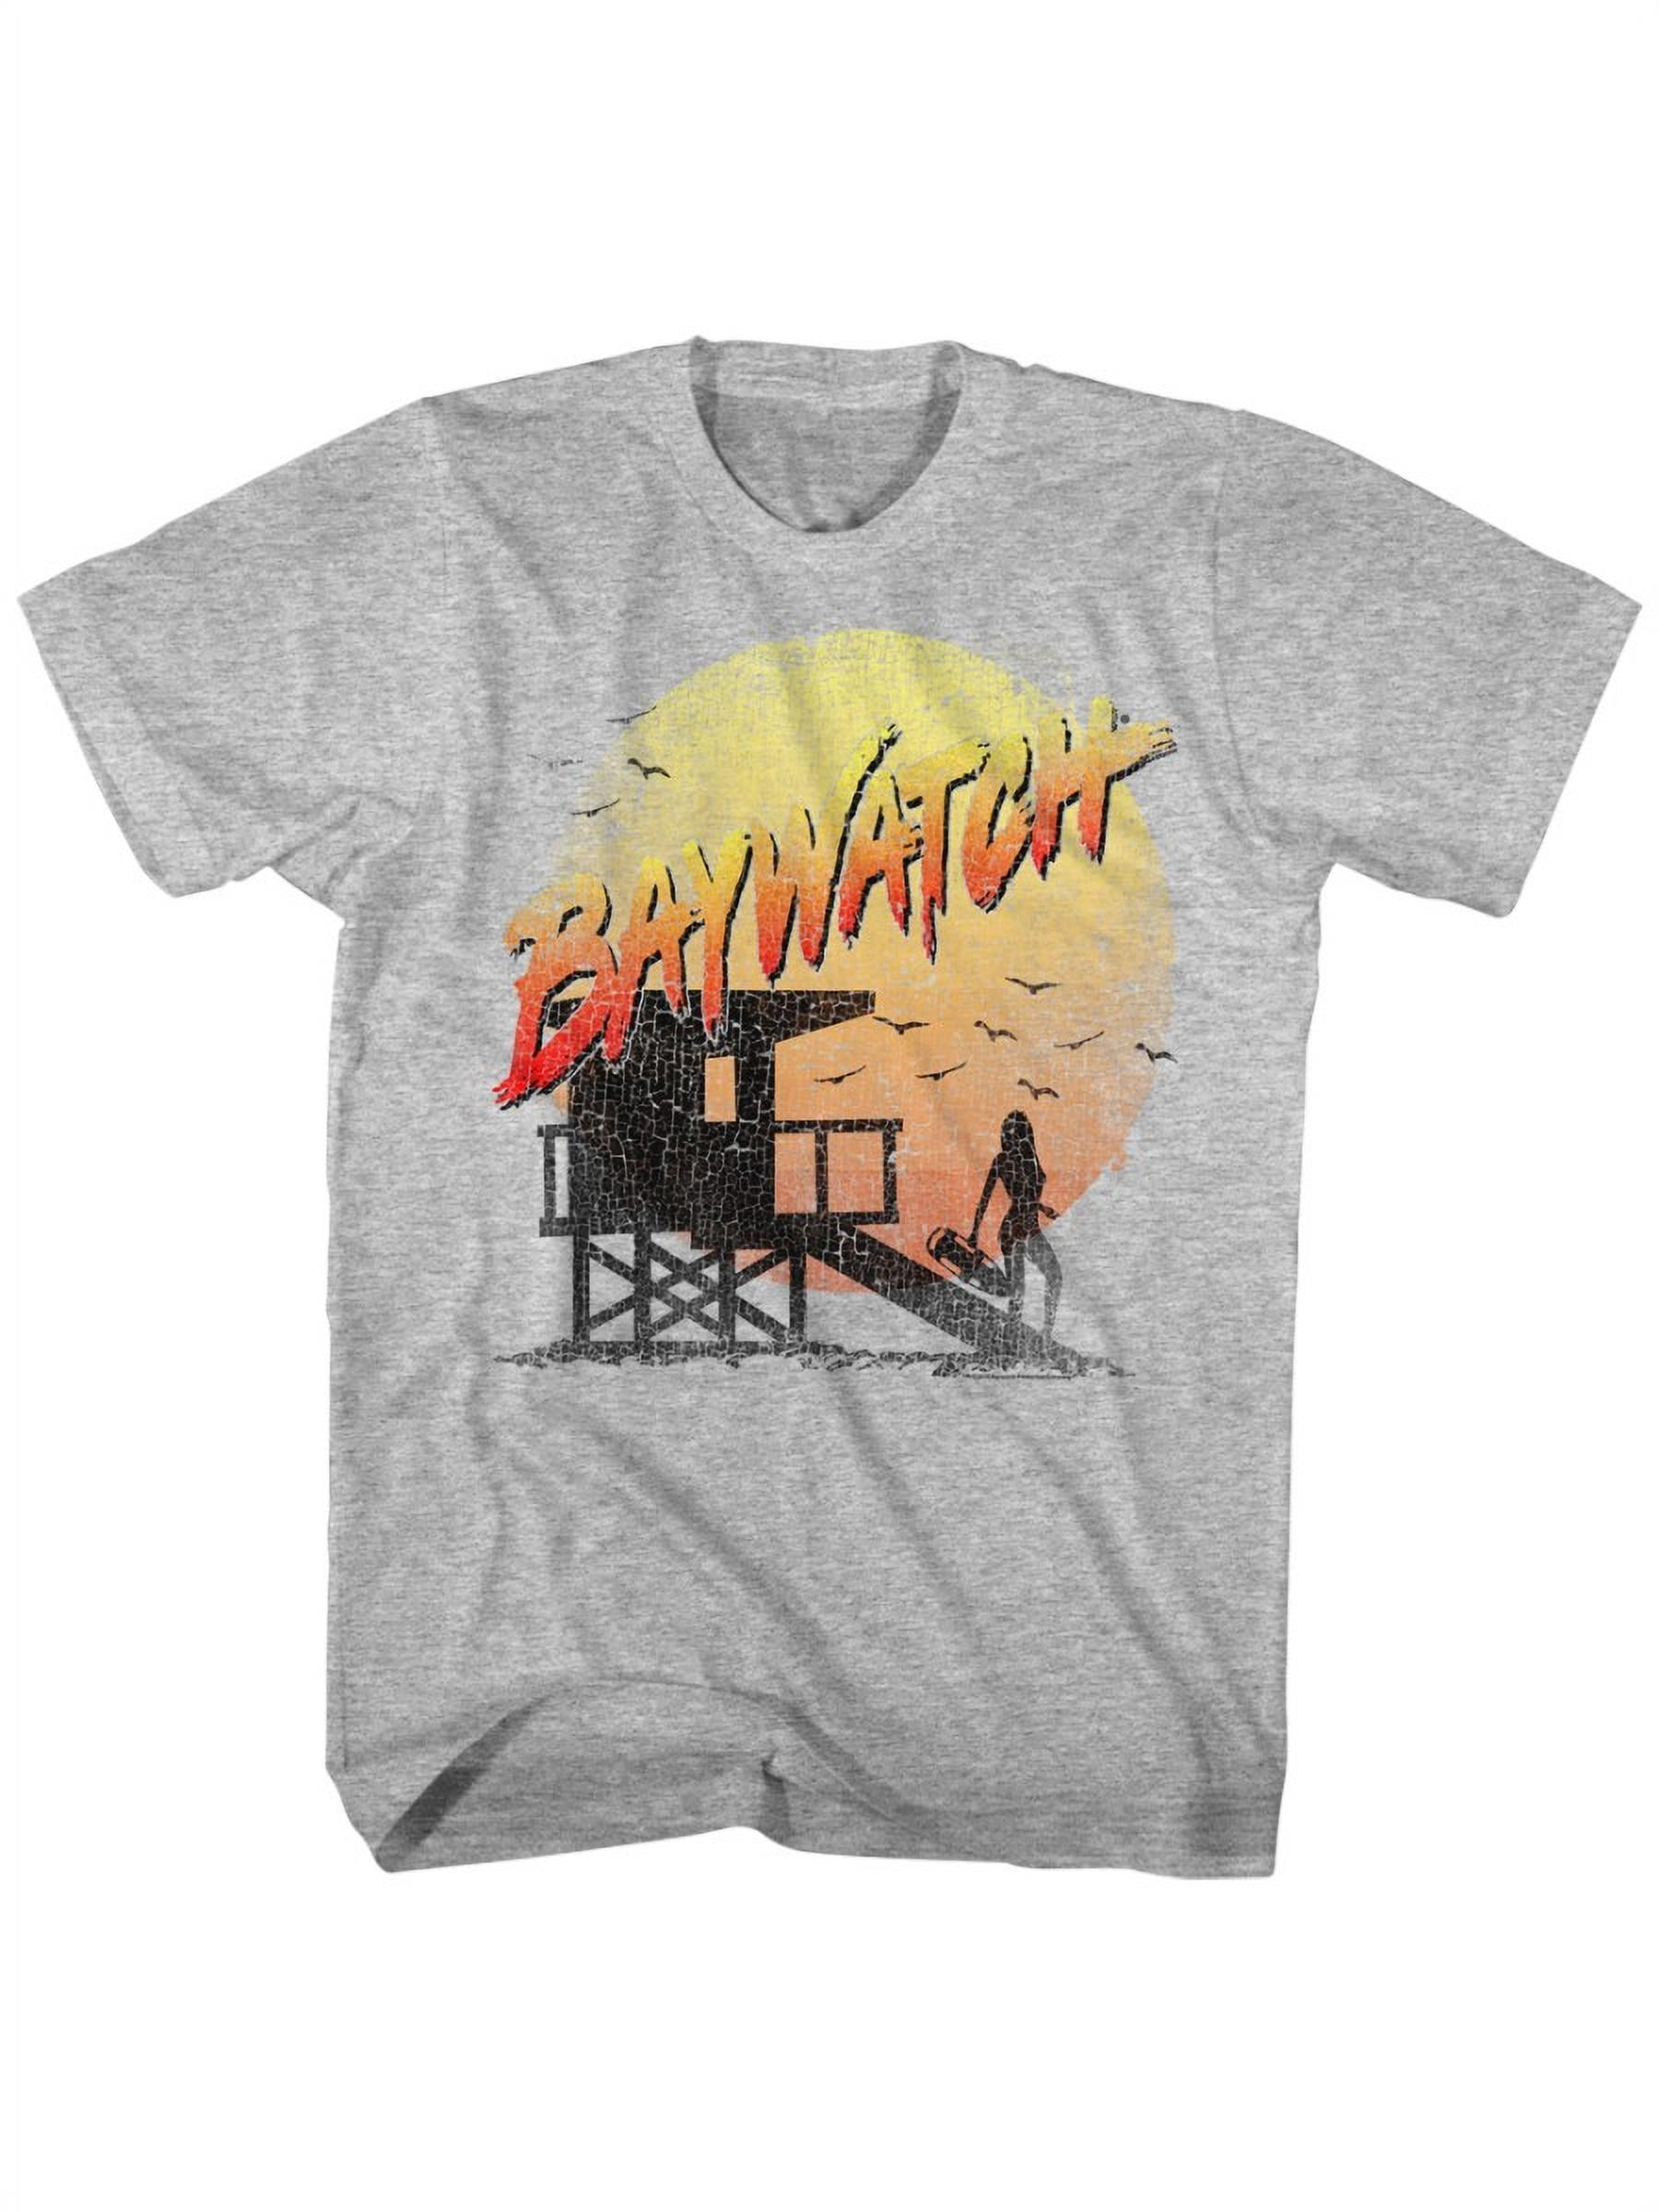 Baywatch Cracked Up Adult Raglan Baseball T-Shirt